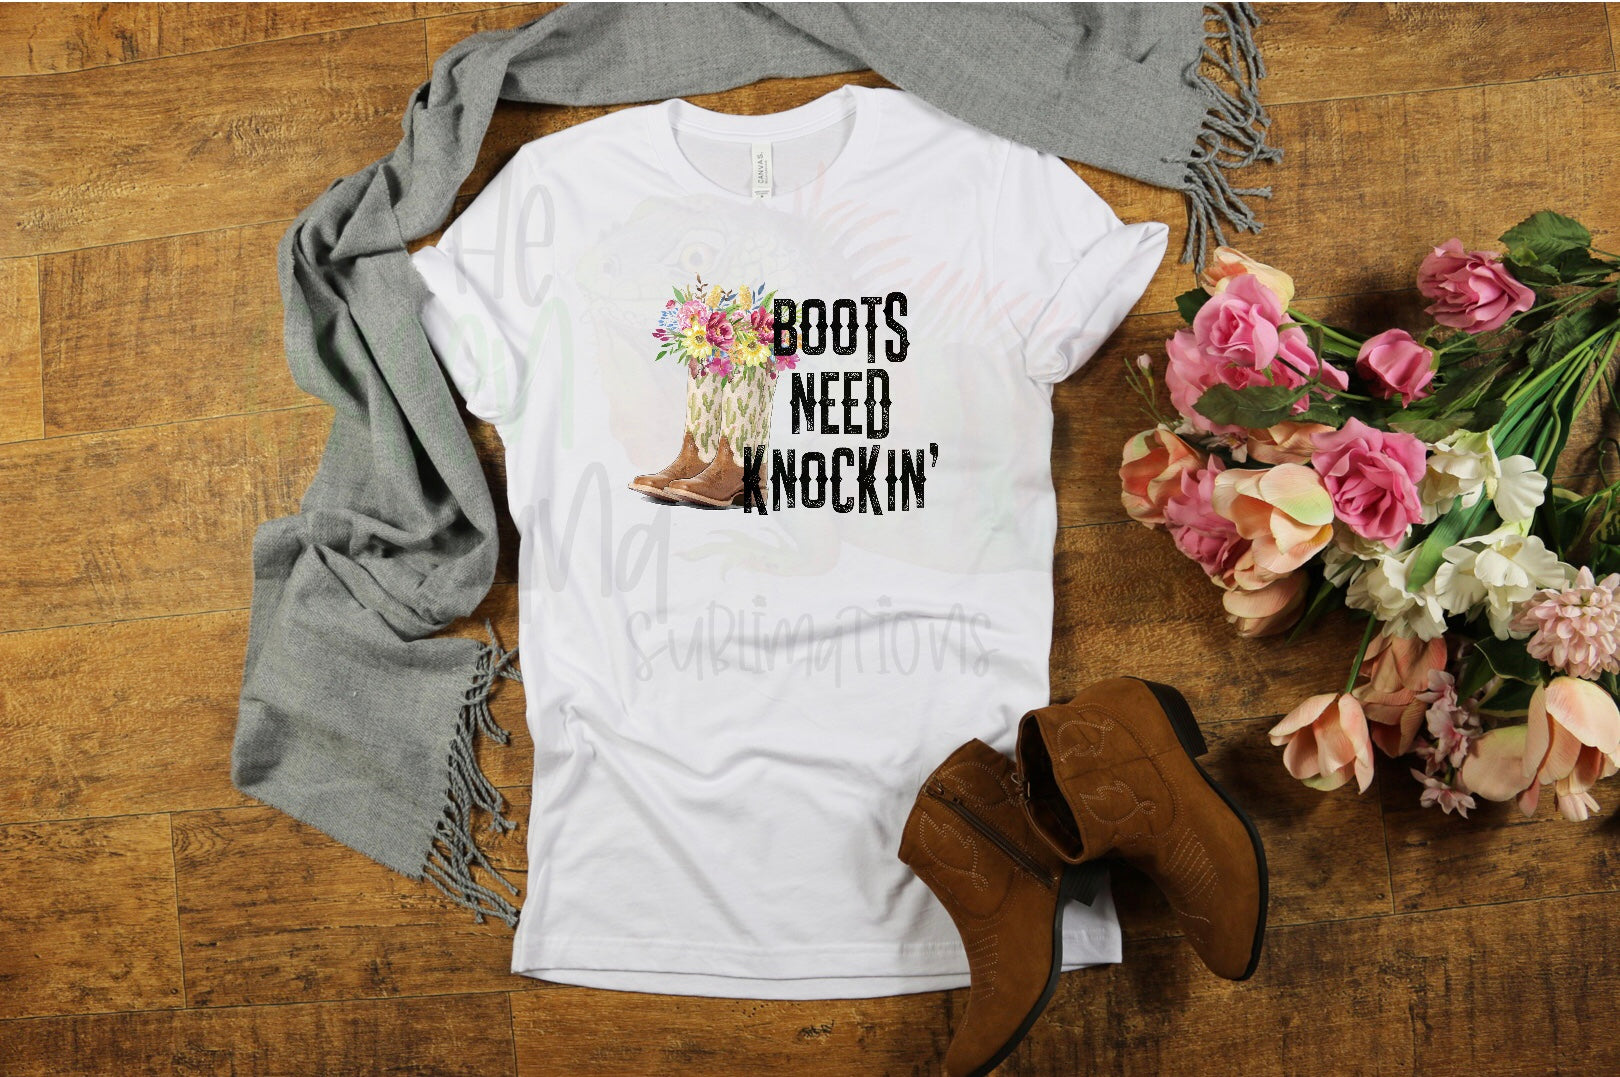 Boots need knockin’